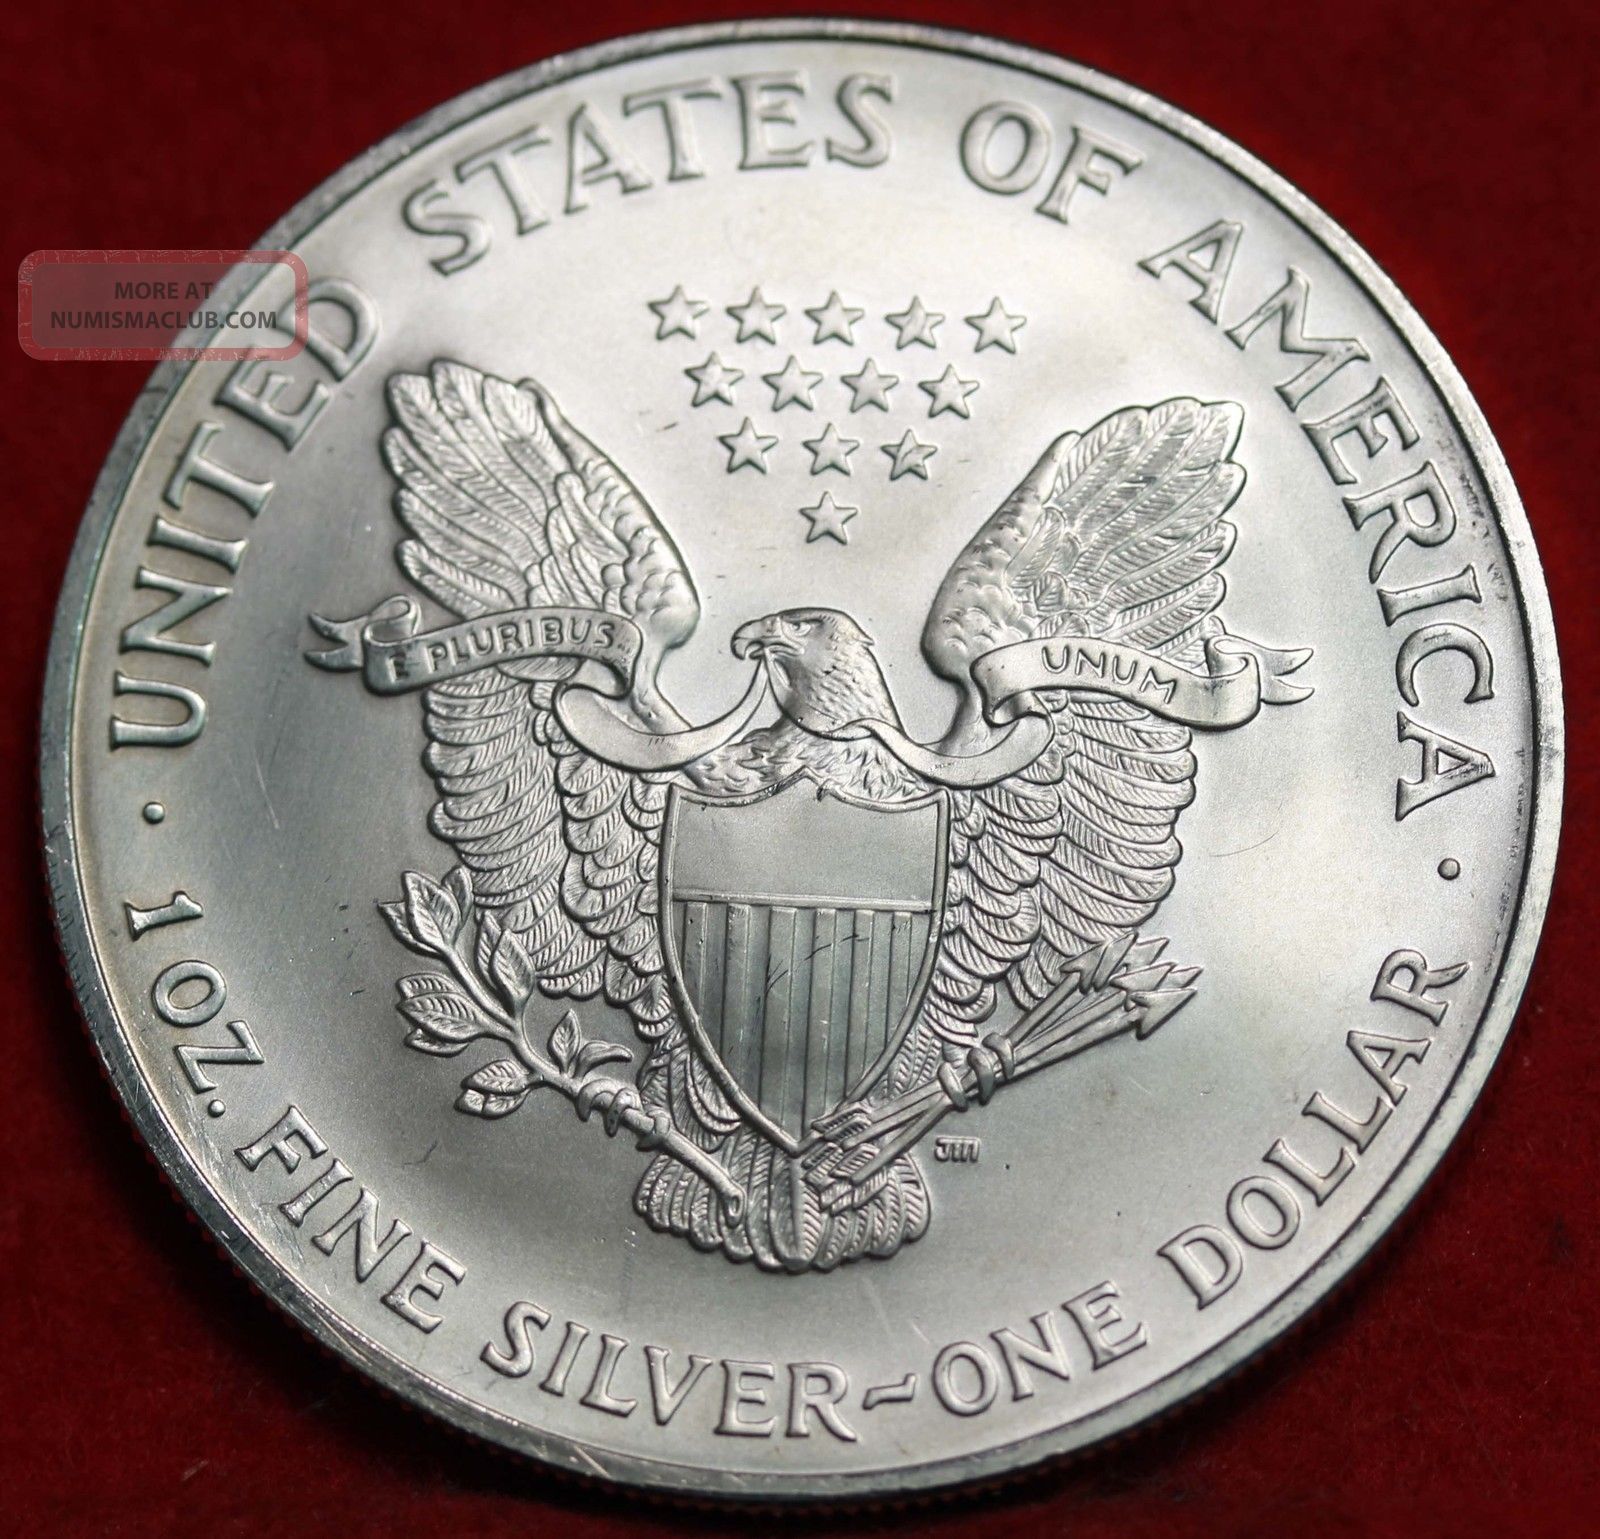 Uncirculated 2004 American Eagle Silver Dollar